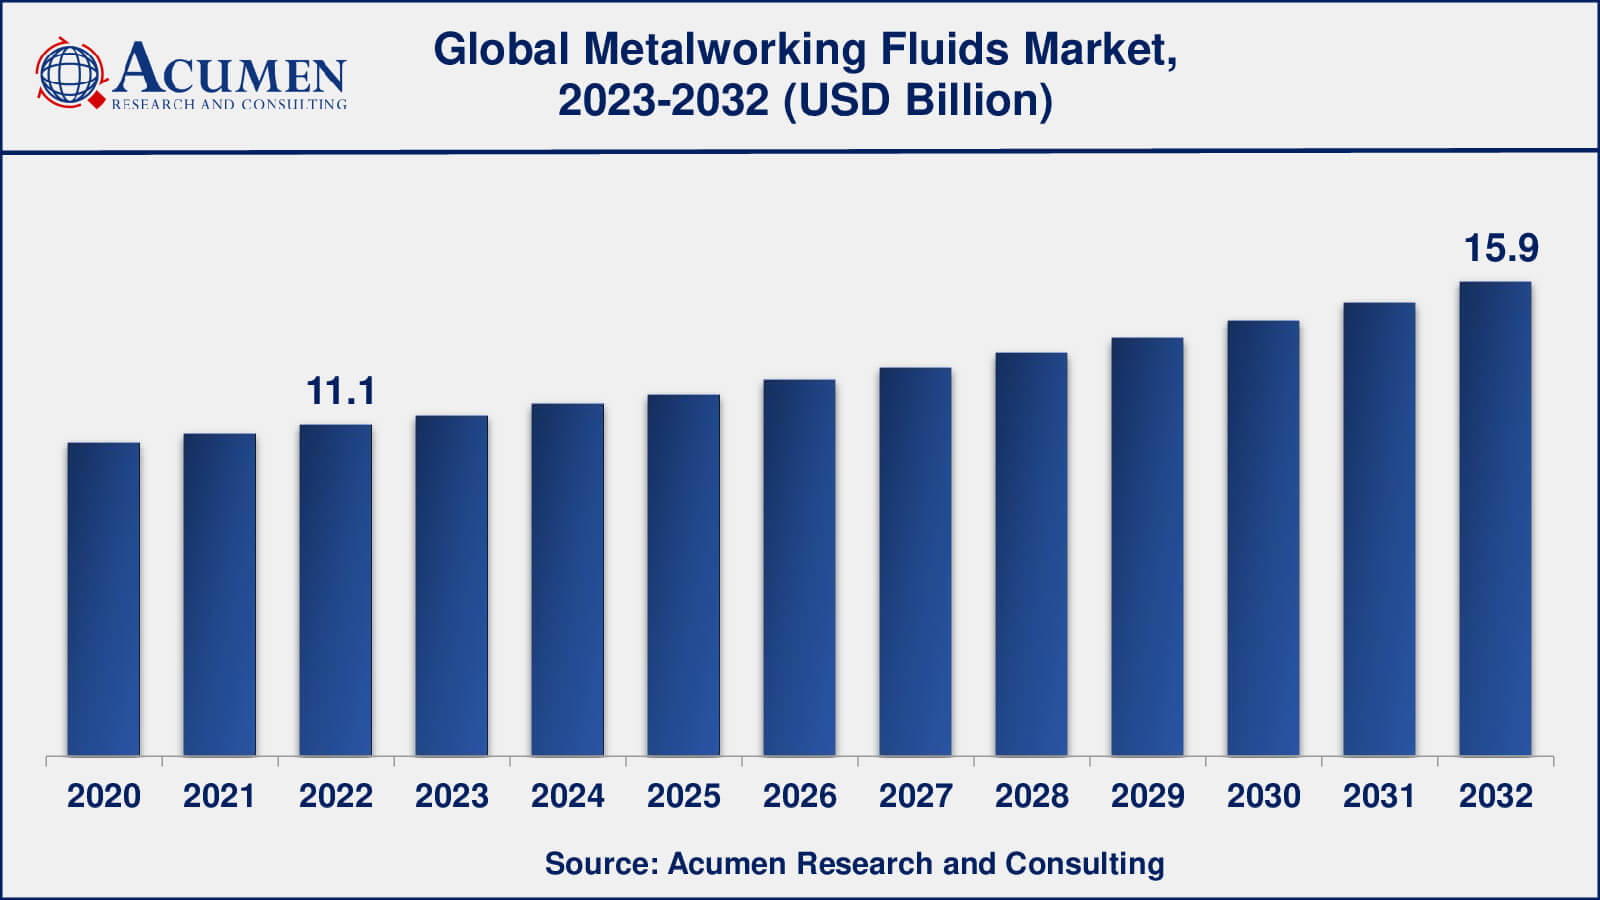 Global Metalworking Fluids Market Dynamics